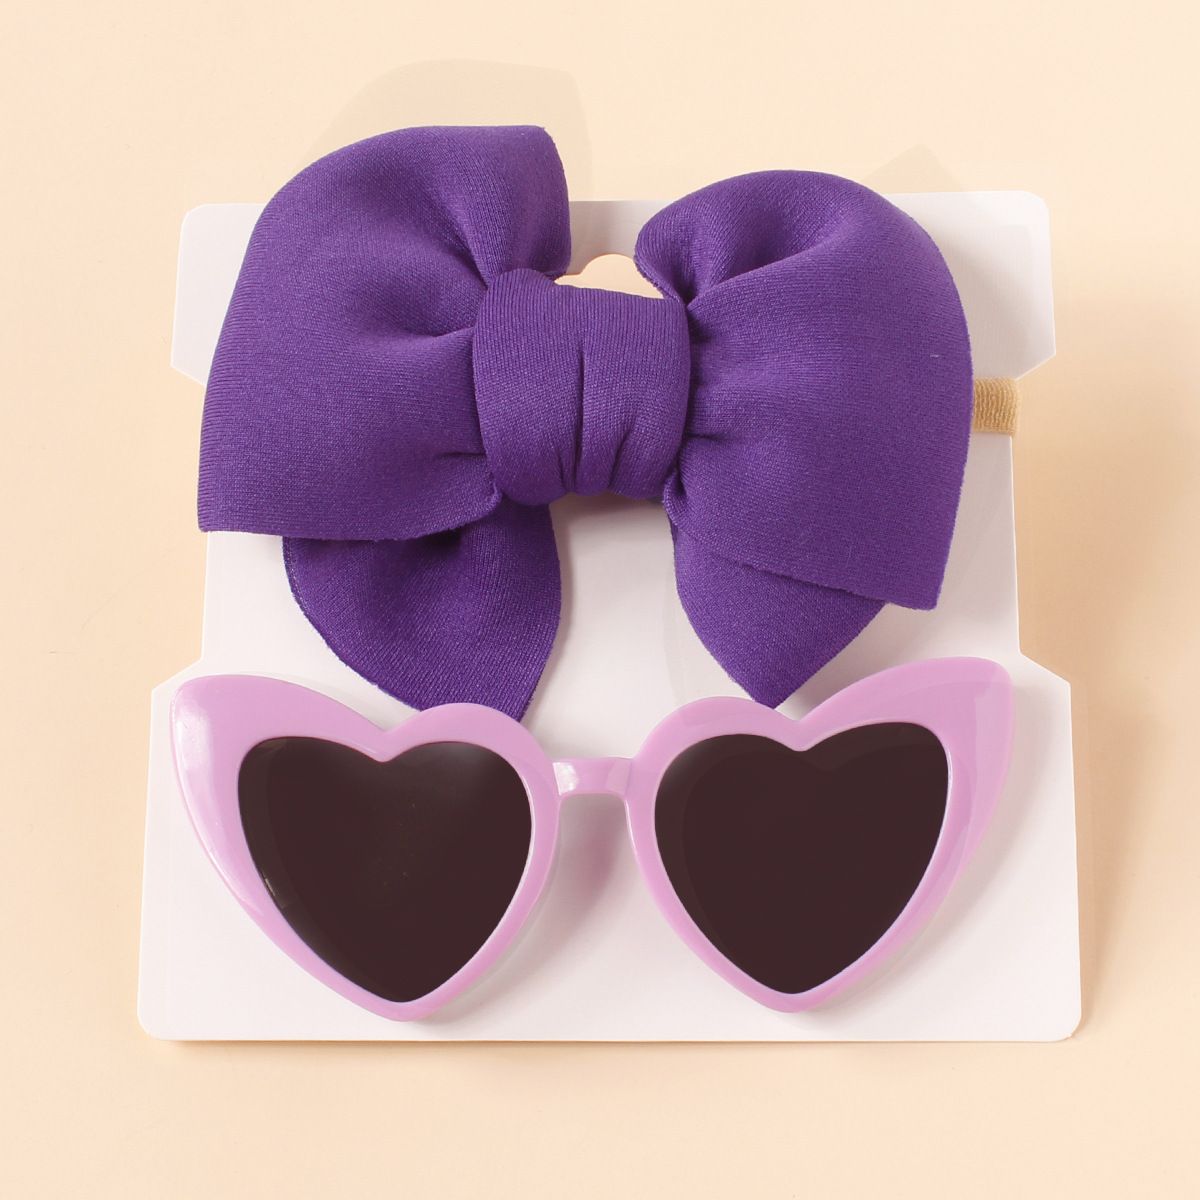 2pcs Baby/Toddler Girl Bowknot Super Soft Nylon Headband with Heart-shaped Sunglasses Set